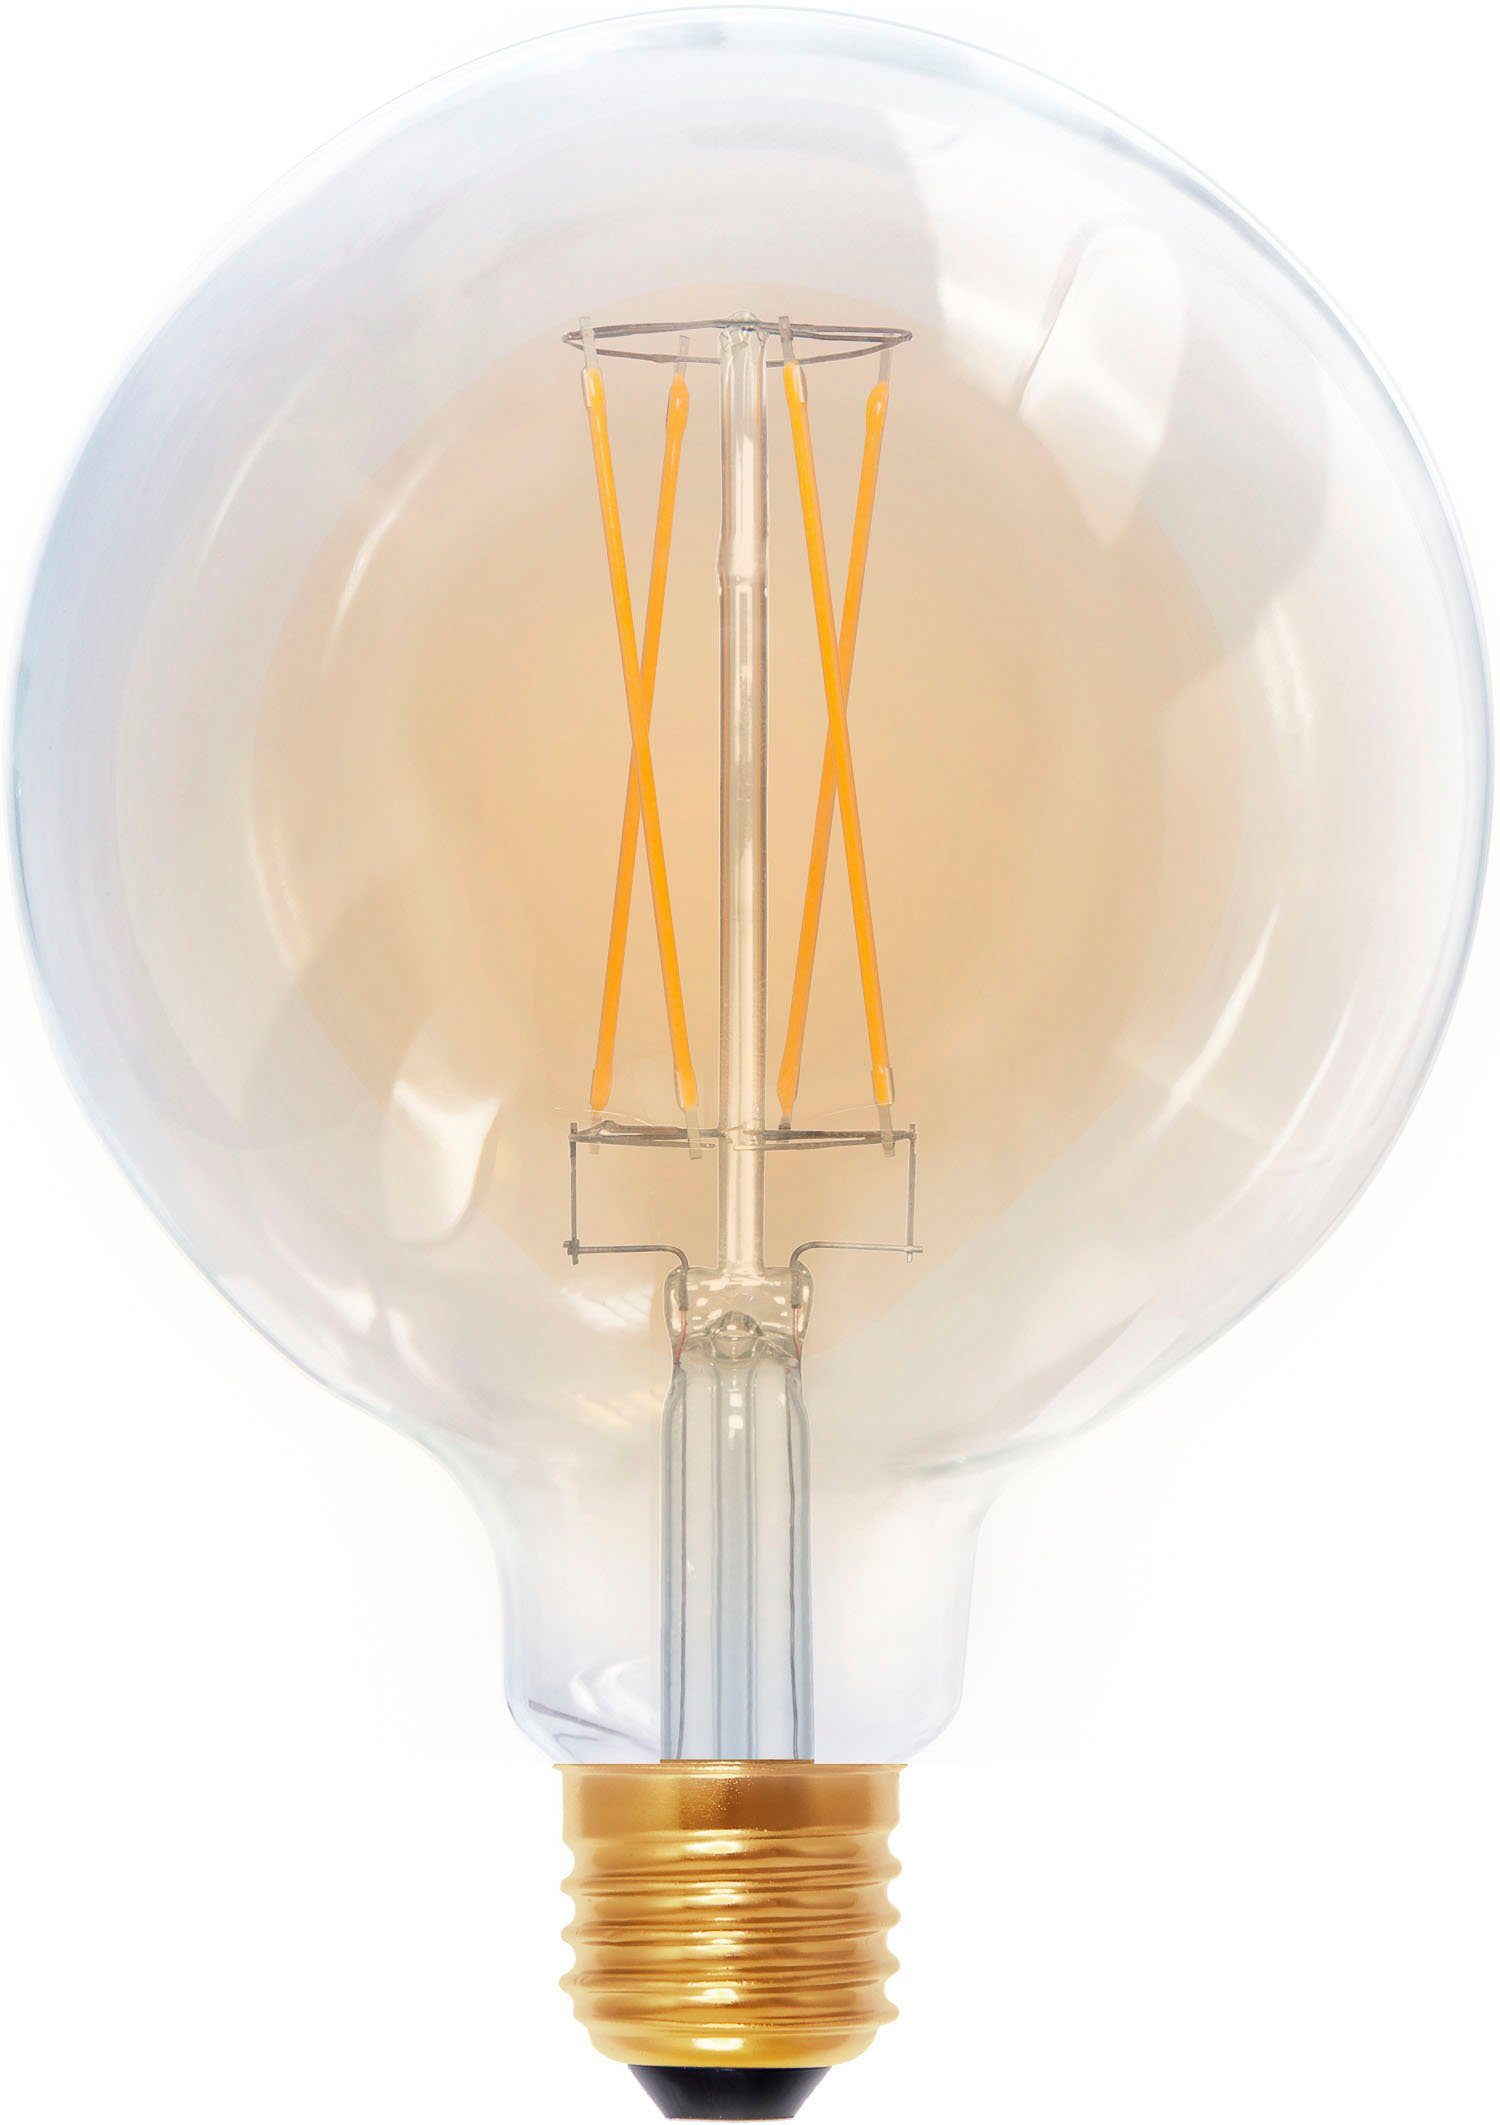 SEGULA LED-Leuchtmittel LED Globe 125 gold, E27, 1 St., Extra-Warmweiß, LED Globe 125 gold, E27, 5W, CRI 90, dimmbar